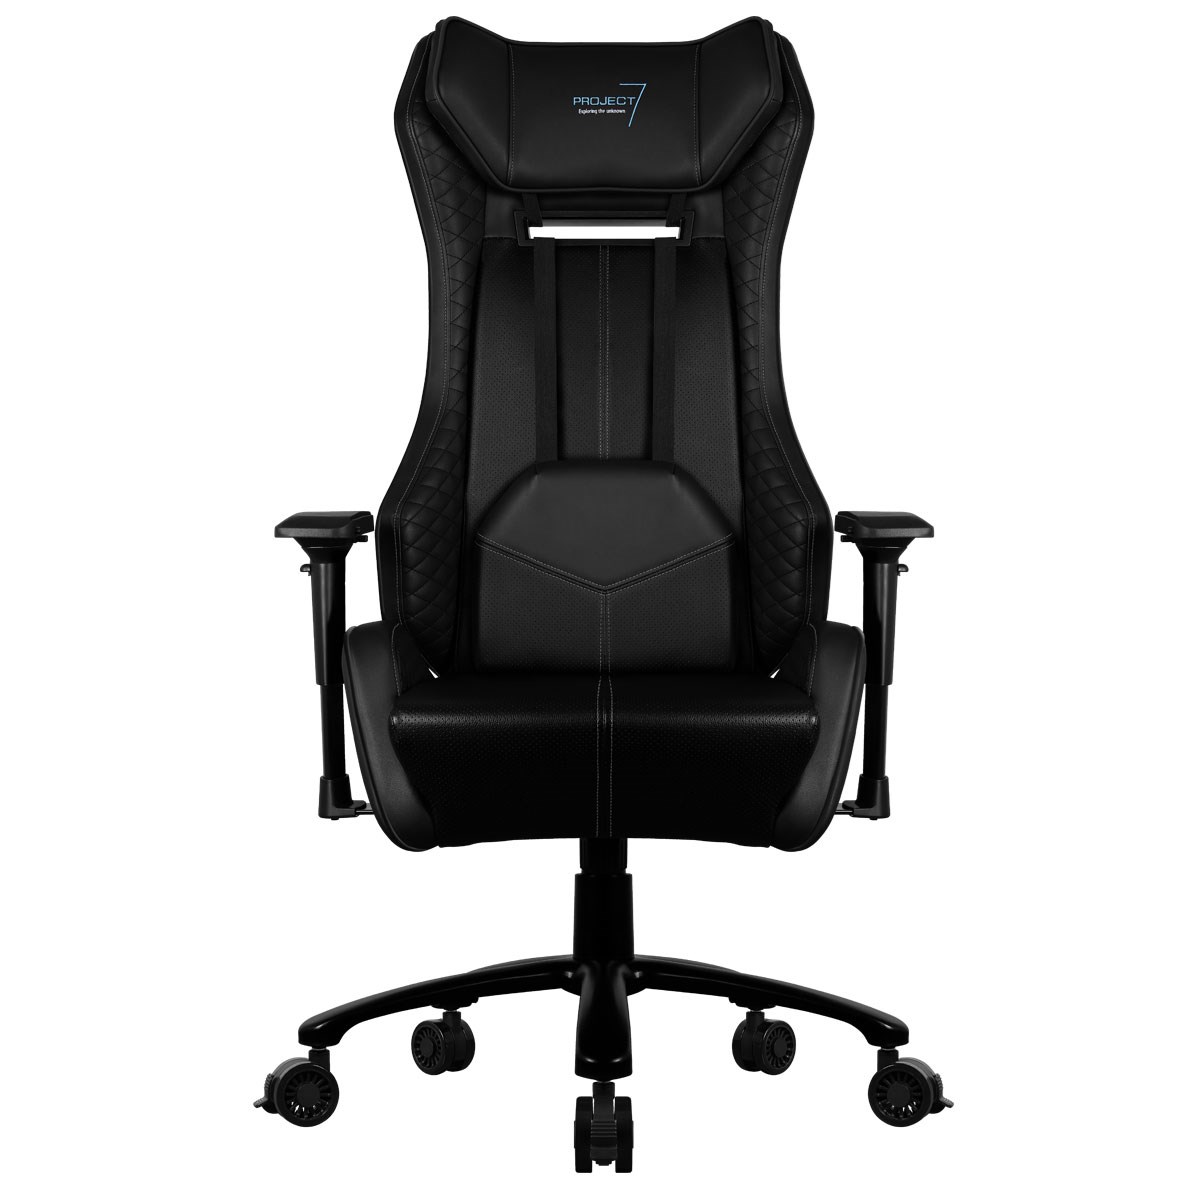  Aerocool  P7 GC1 Air Gaming  Chair  Black ACGC 2005111 B1 